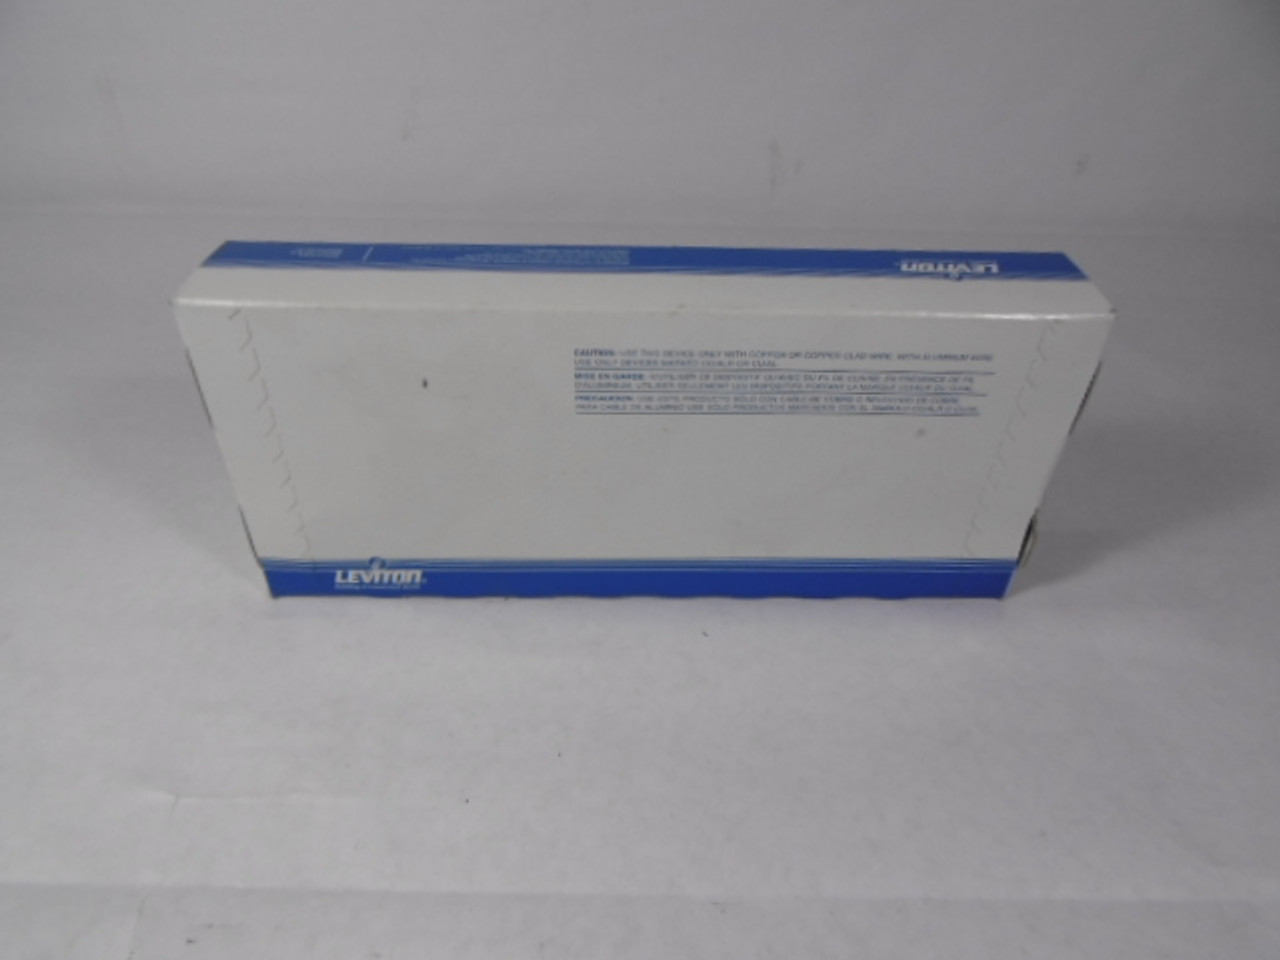 Leviton 1451-W Toggle Wall Light Swtch 15 Amp 120 V Box Of 10 ! NEW !